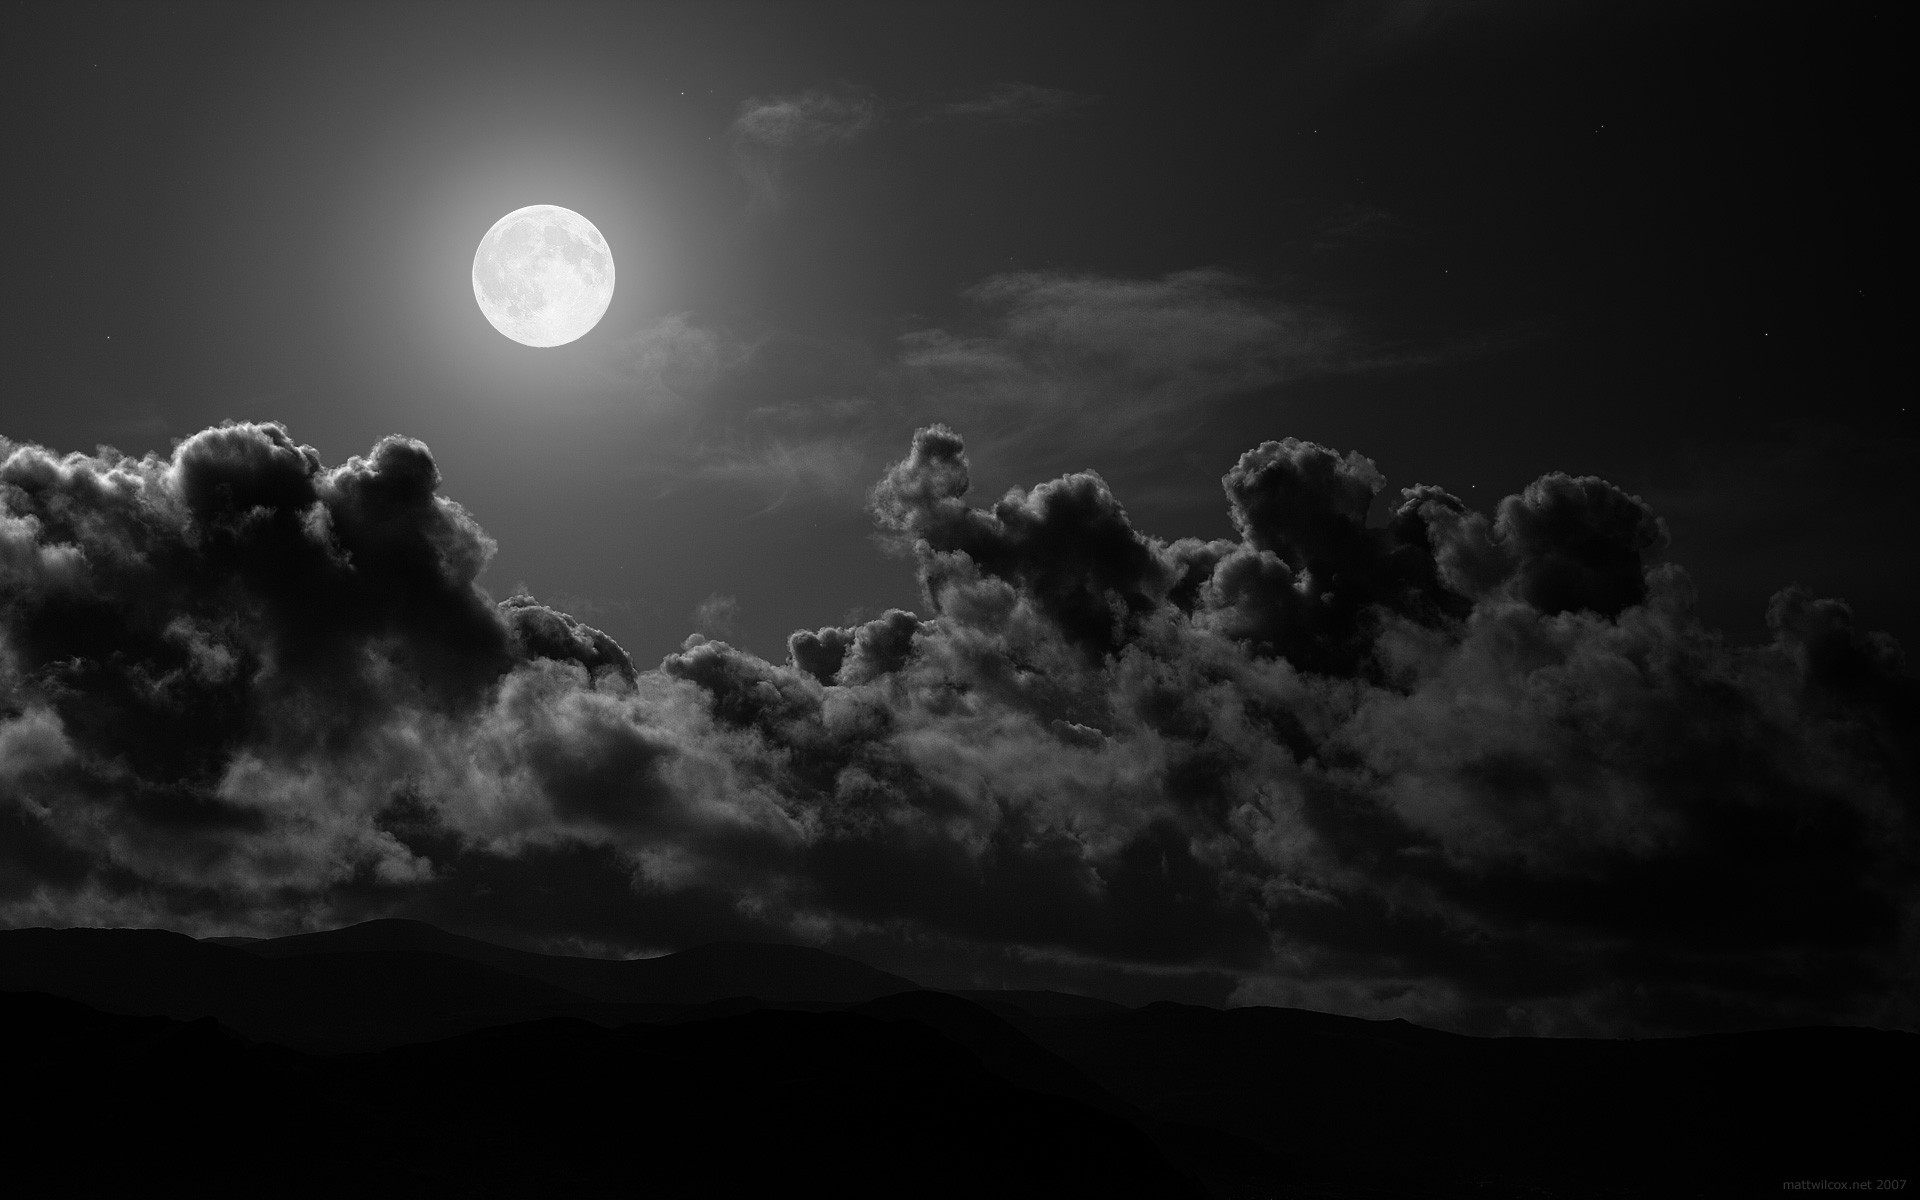 General 1920x1200 dark monochrome clouds Moon night moonlight sky nature digital art hills landscape full moon